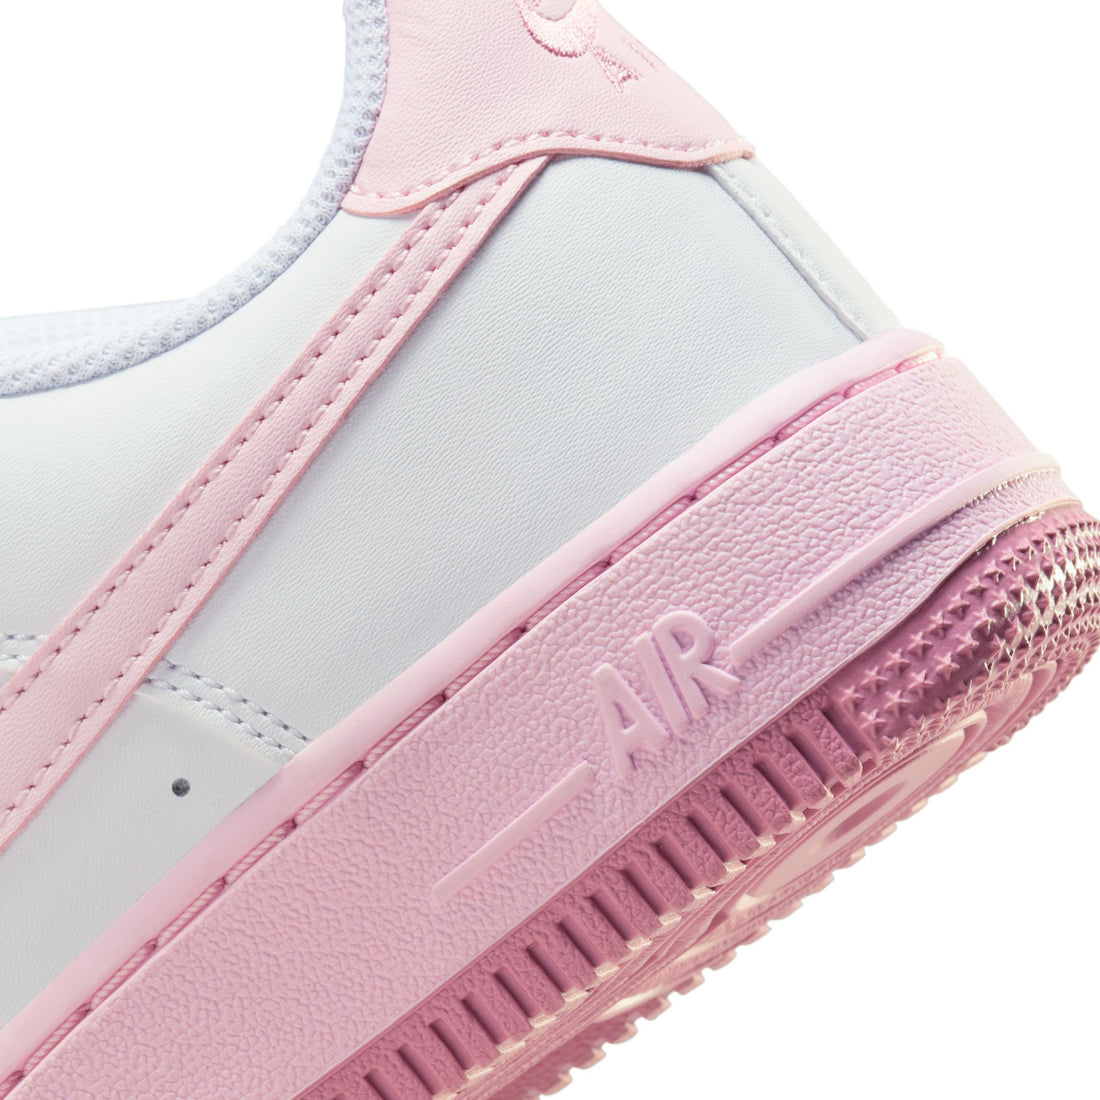 Nike Air Force 1 GS (White/Pink Foam)